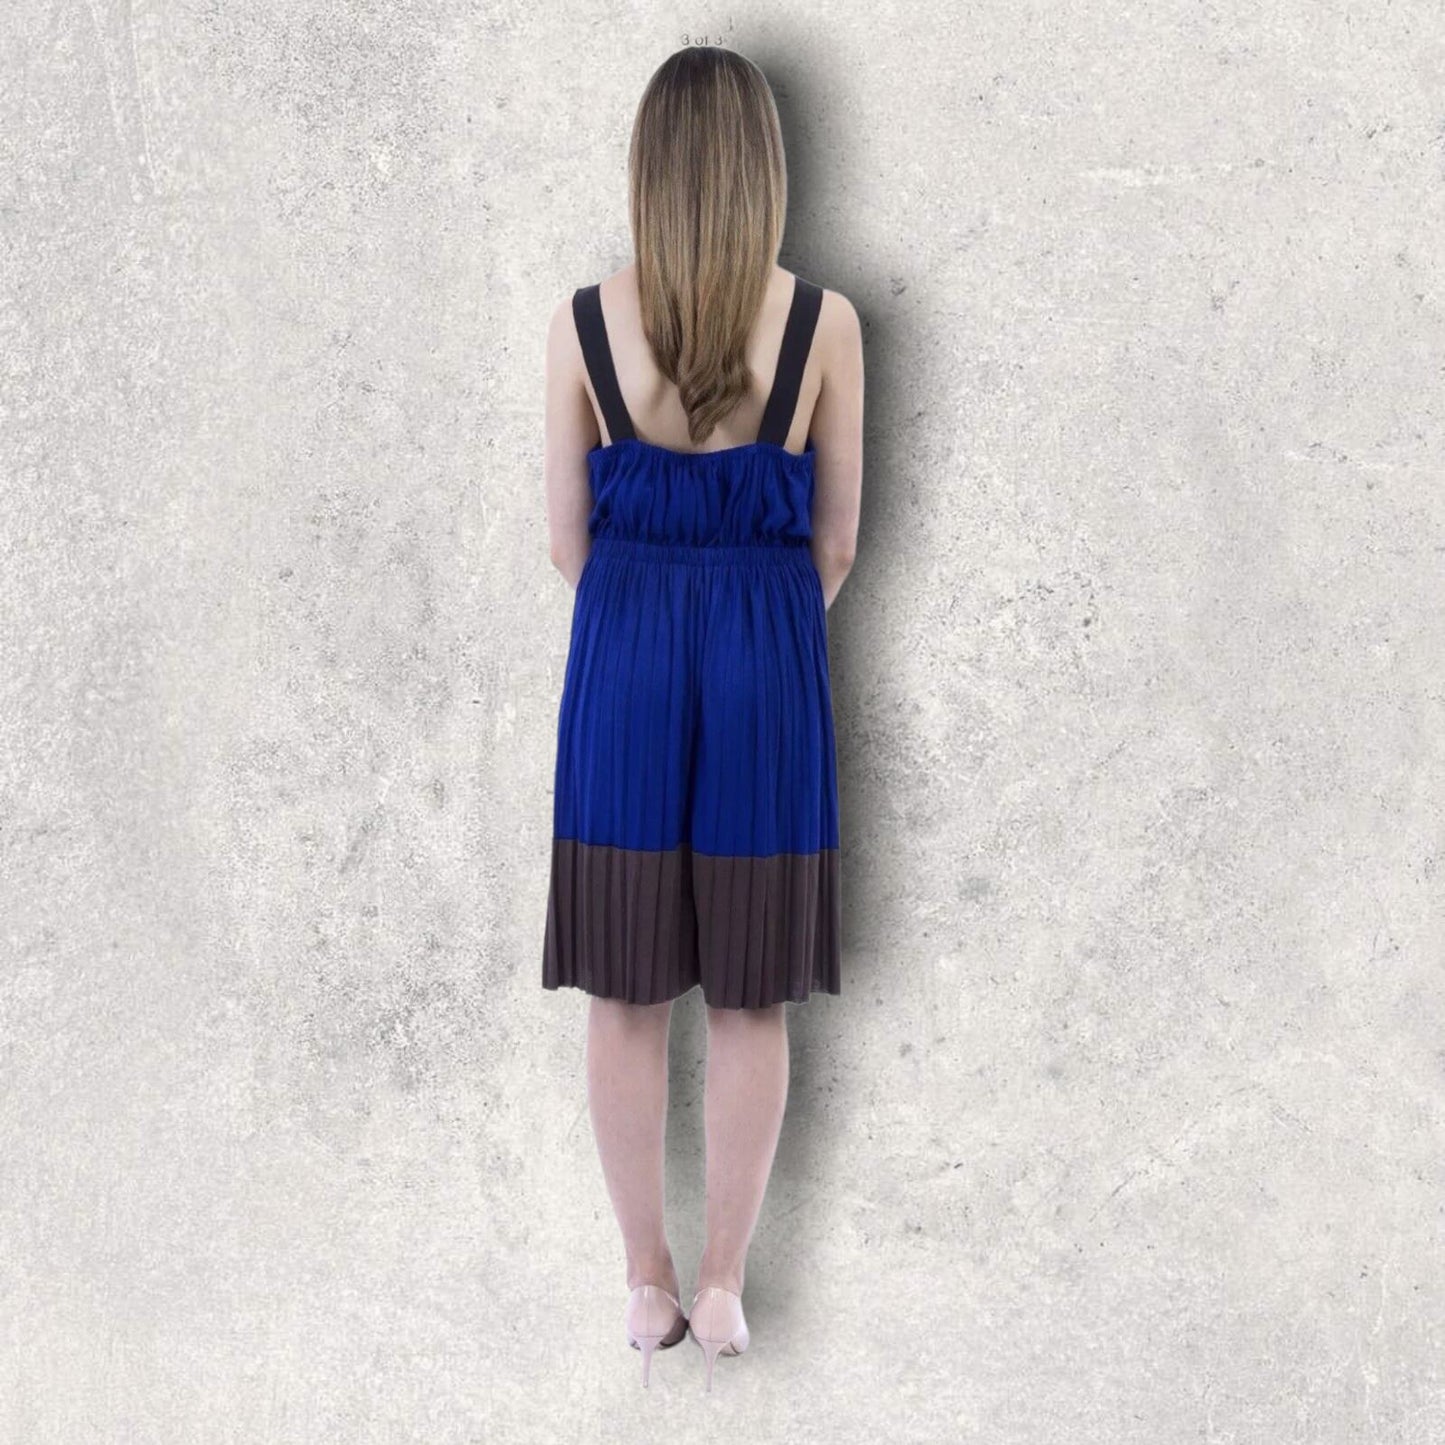 Hoss Intropia Blue & Brown Colour Block Pleated Sundress Size S UK 10 US 6 EU 38 Timeless Fashions